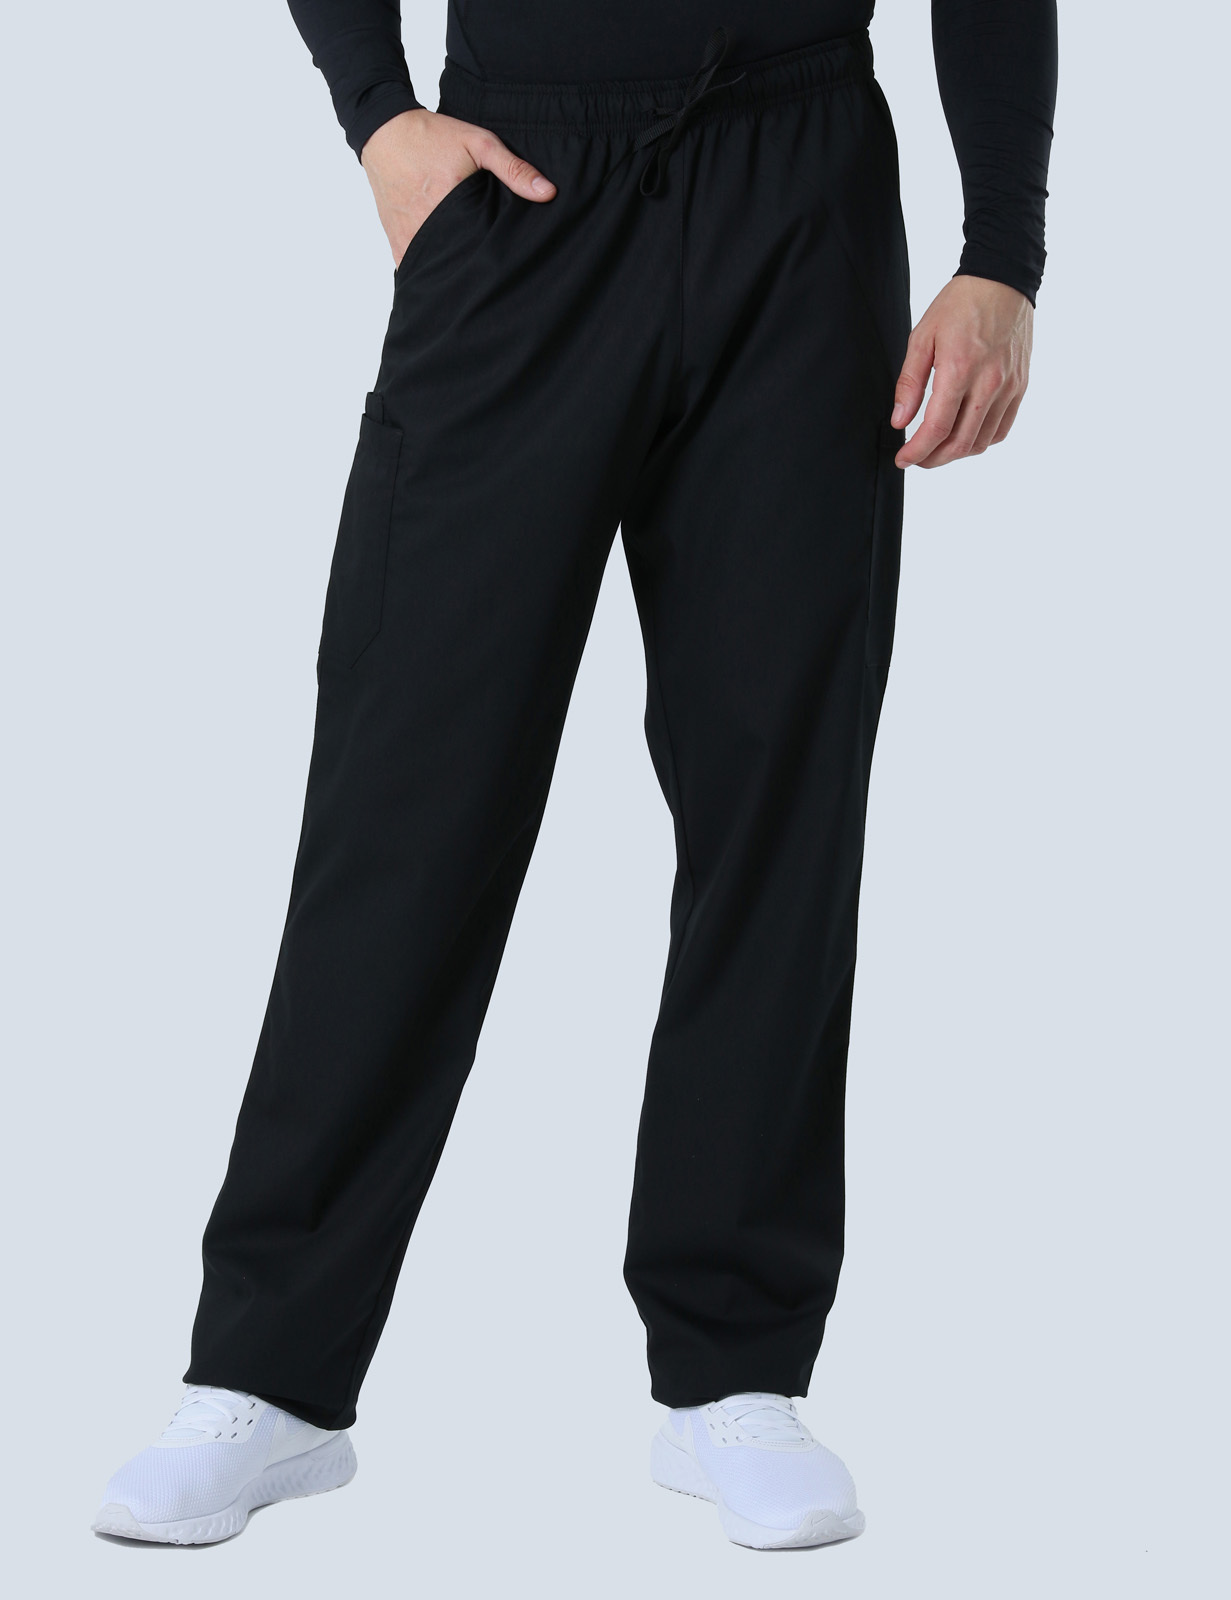 Men's Cargo Performance Pants - Black - Medium